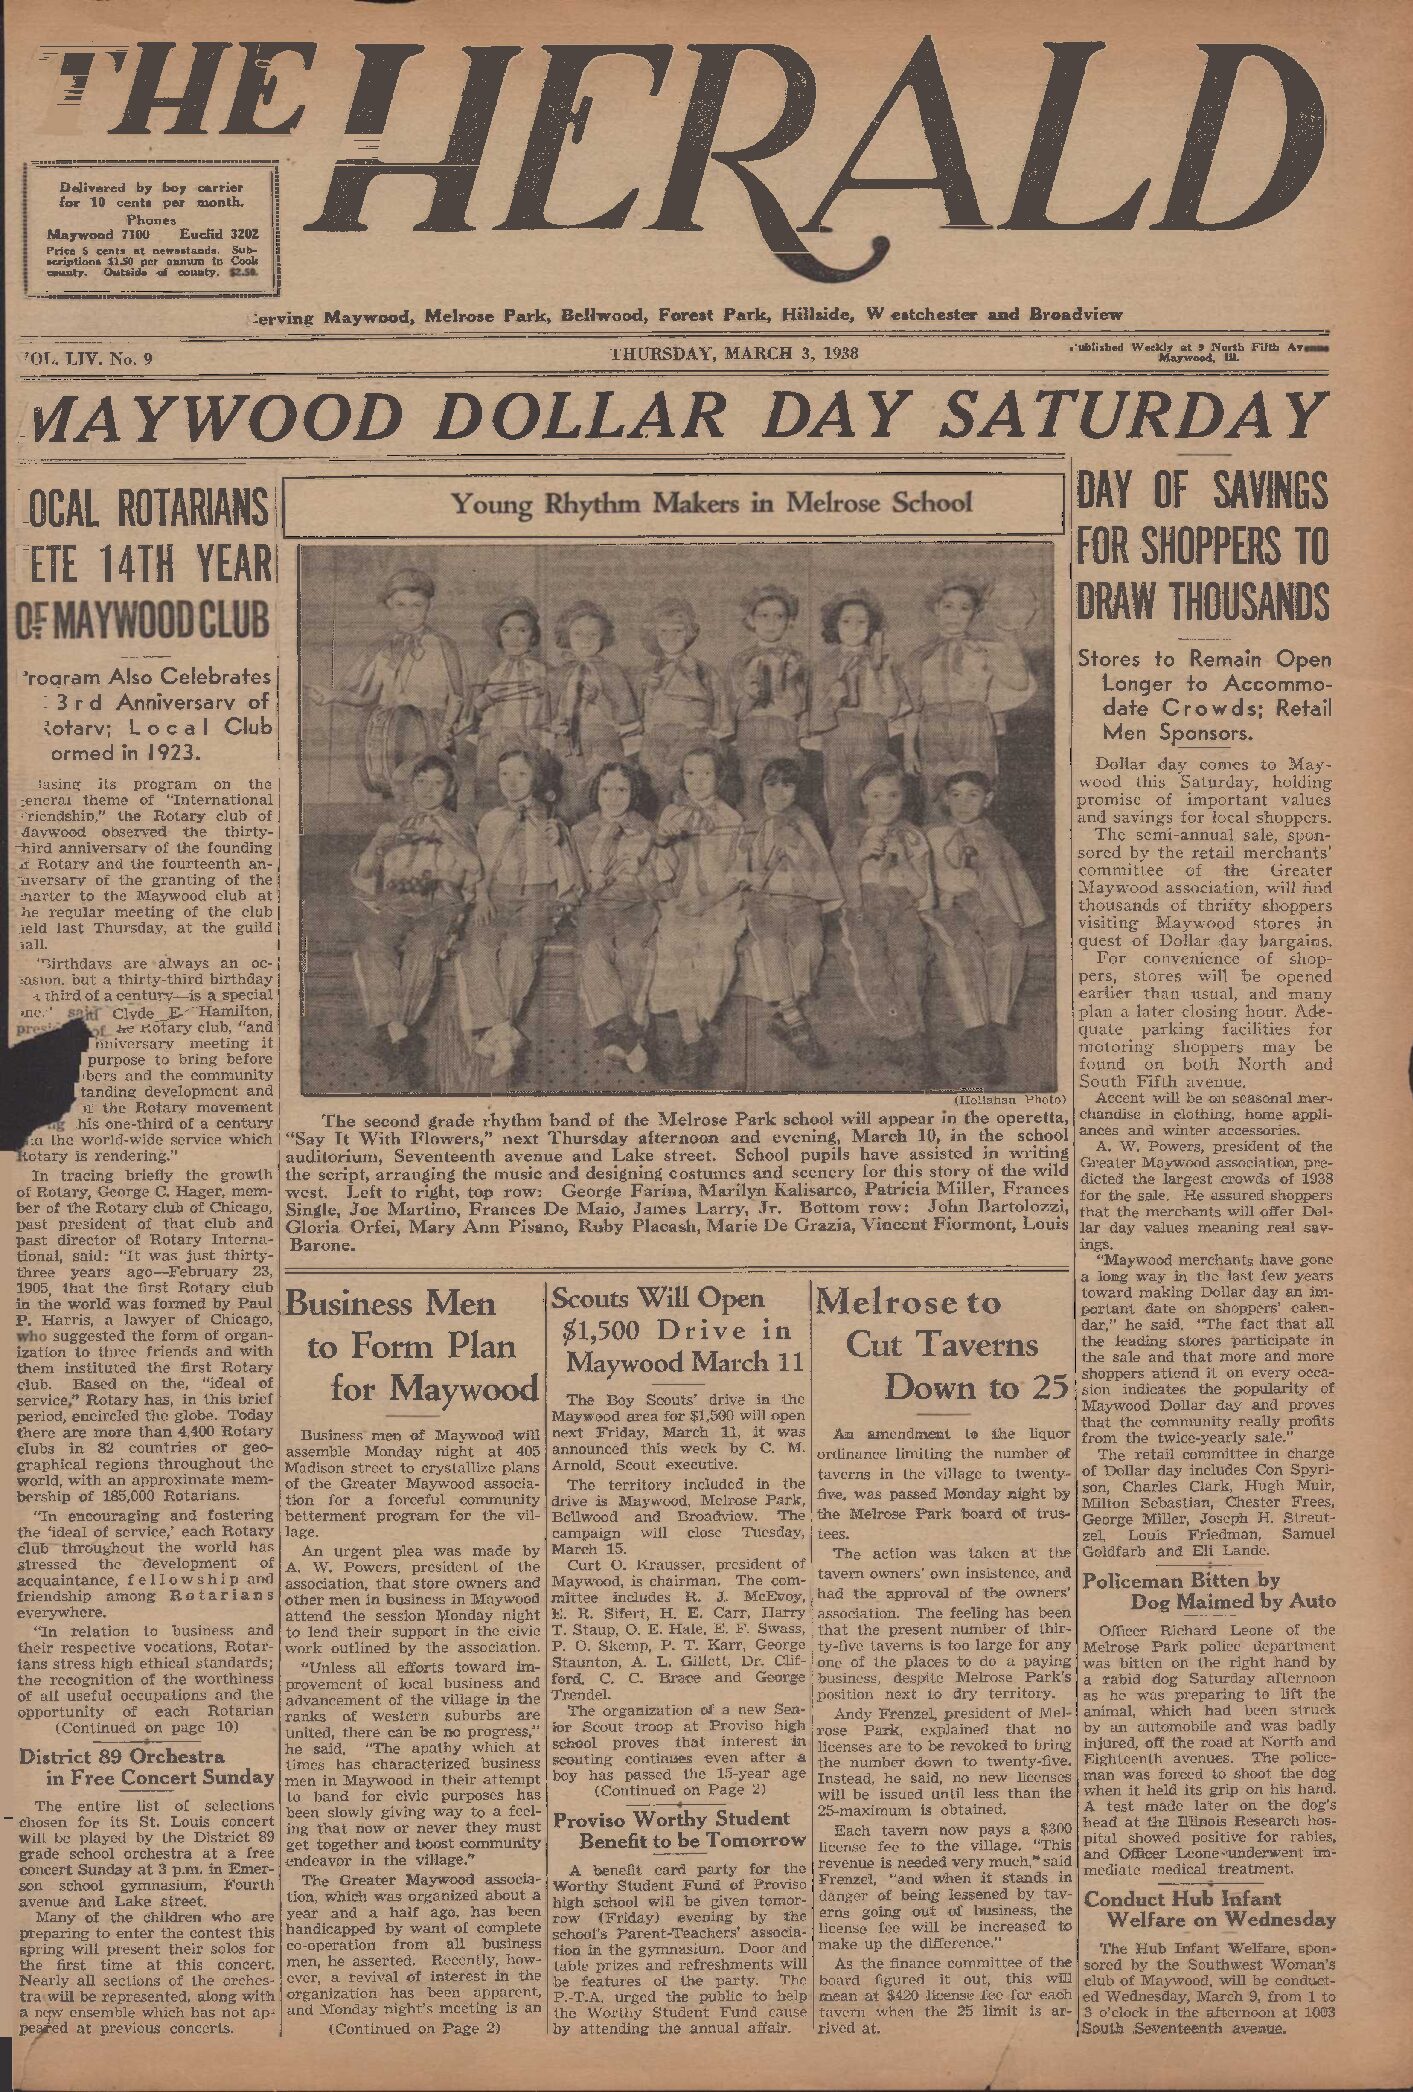 The Herald – 19380303